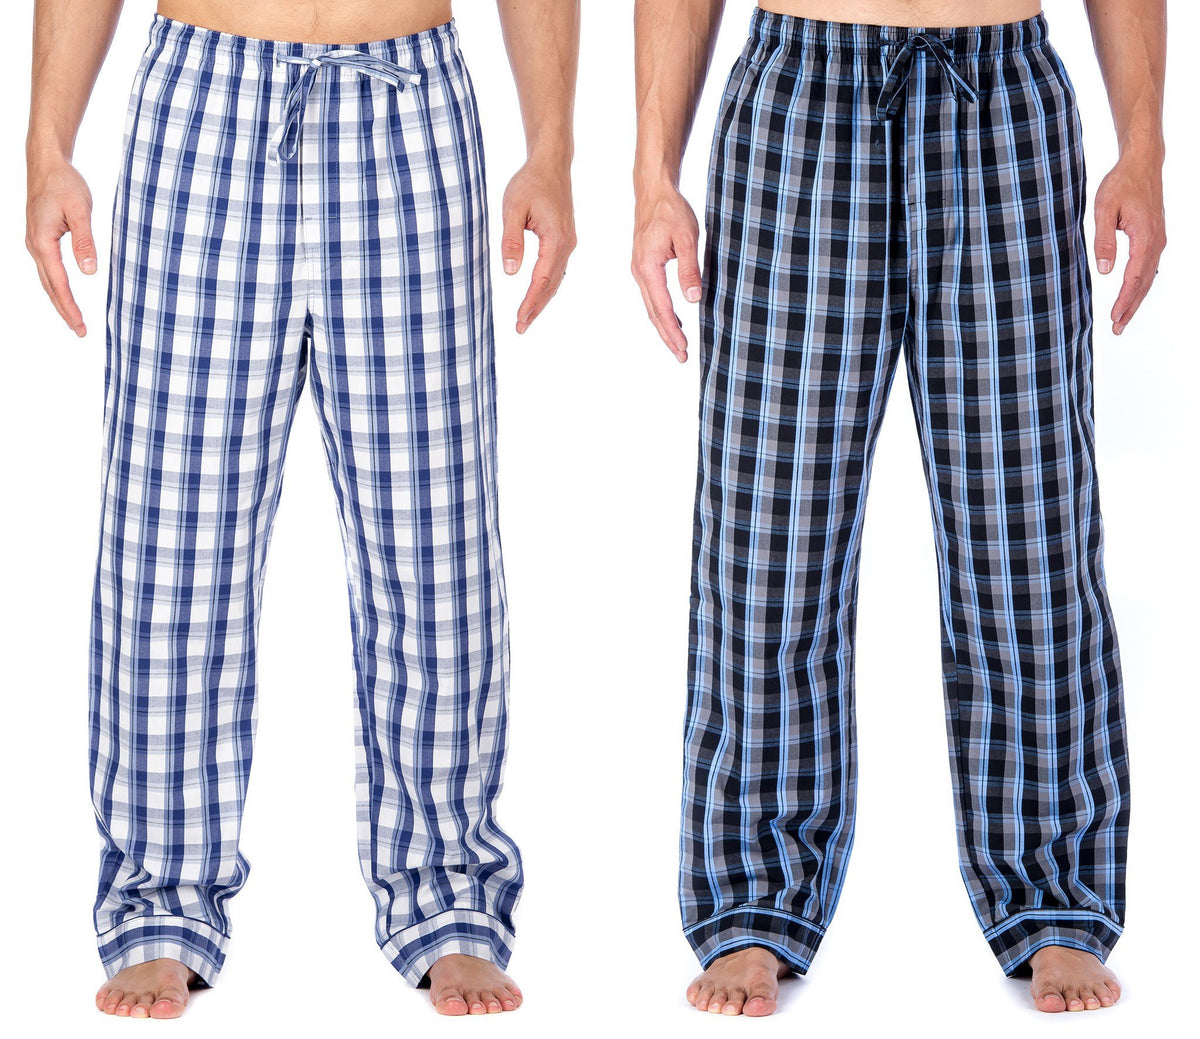 Men's Premium Cotton Lounge/Sleep Pants - 2 Pack - 2-Pack (Blue/Grey - Blue/White Plaid)